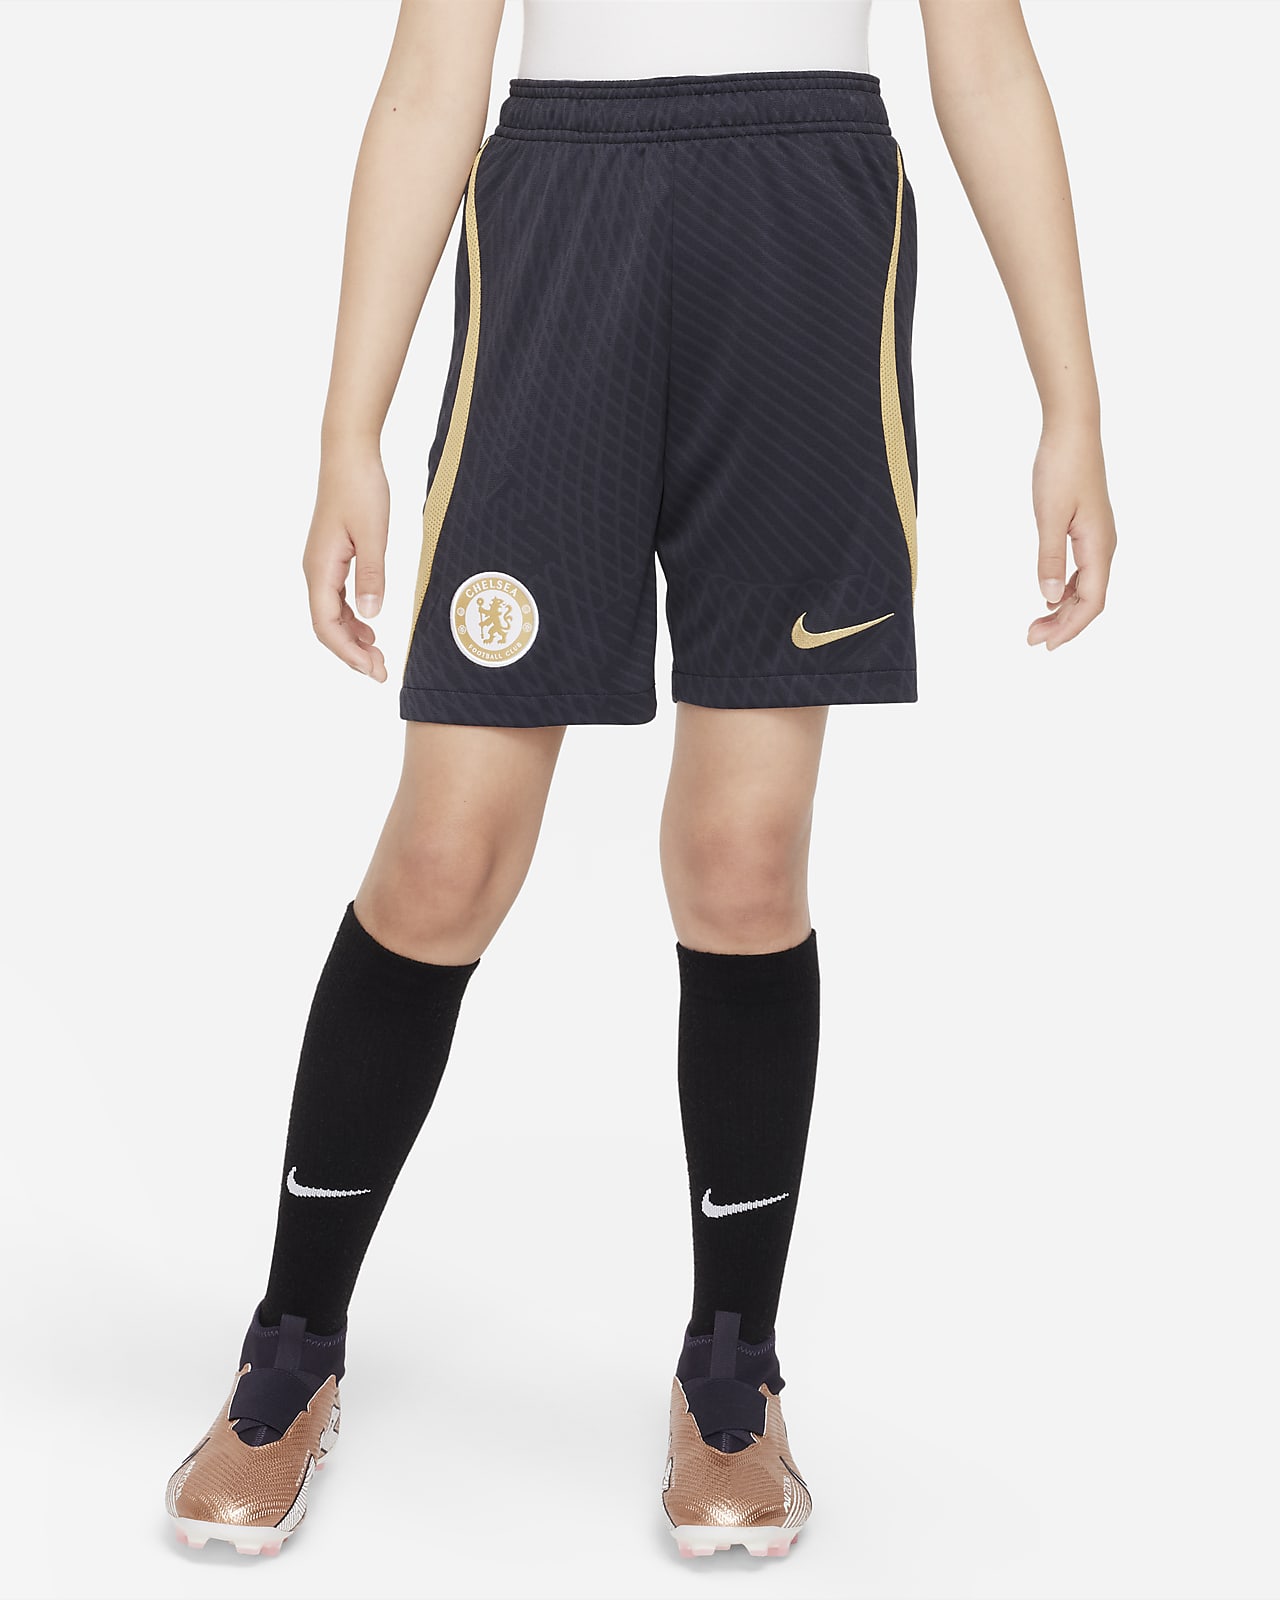 Chelsea FC Strike Pantalons curts de teixit Knit Nike Dri-FIT de futbol - Nen/a